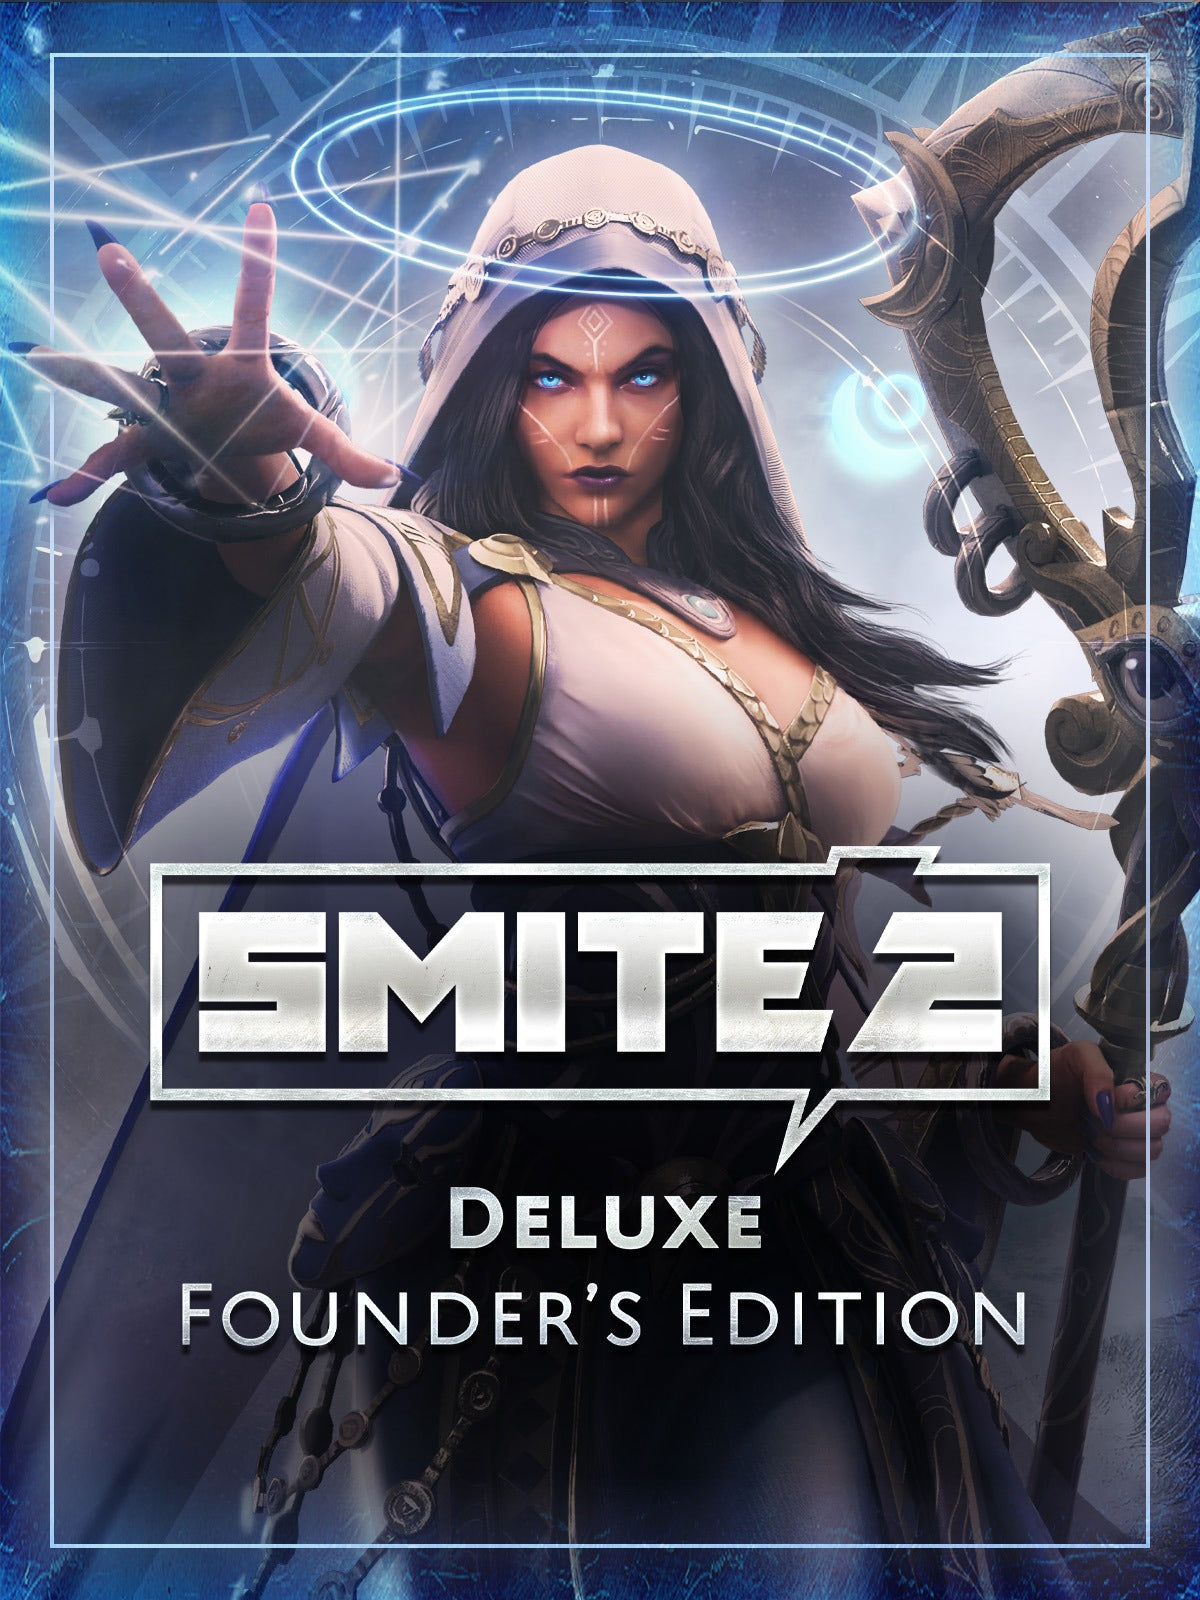 SMITE 2 (Deluxe Founder's Edition) - למחשב